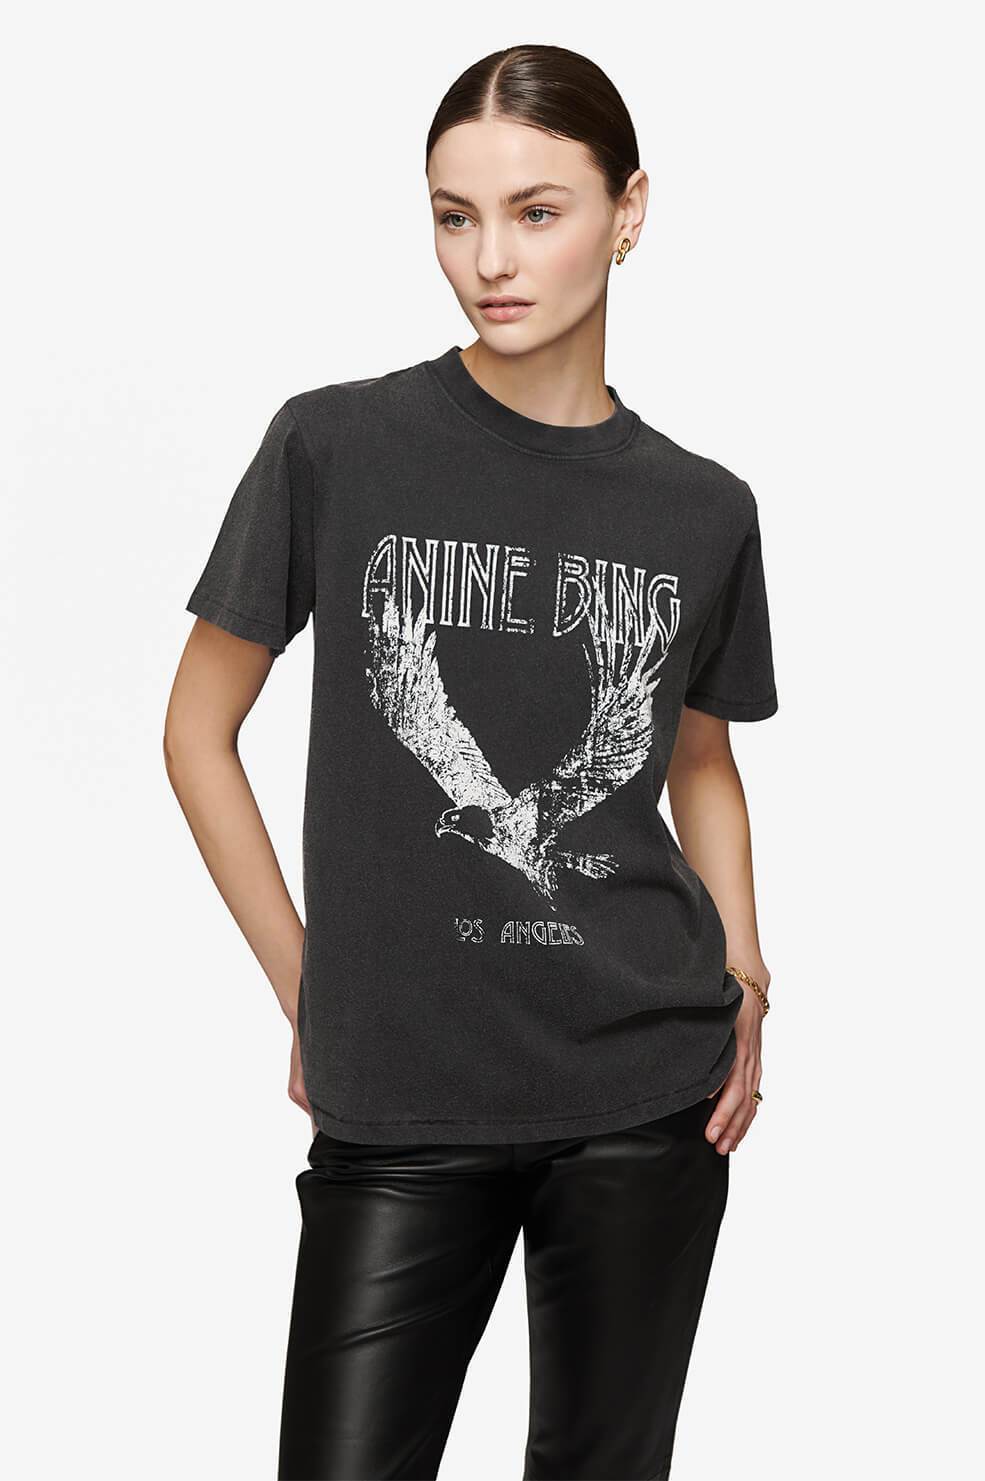 Anine bing black t-shirt